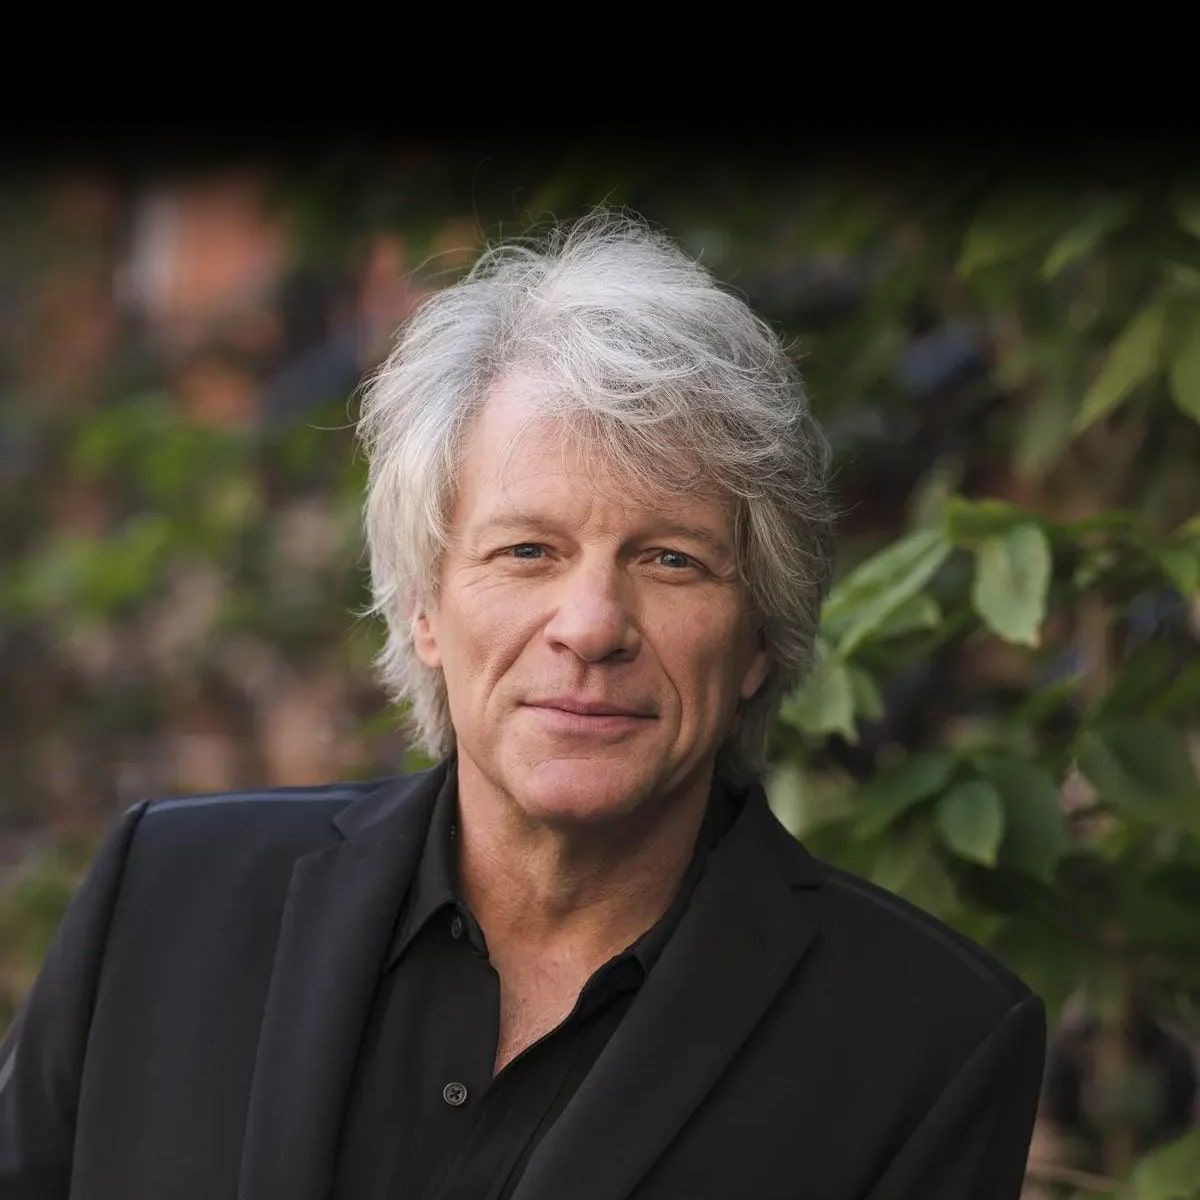 Muere Jon Bon Jovi, el cantante de la banda Bon Jovi